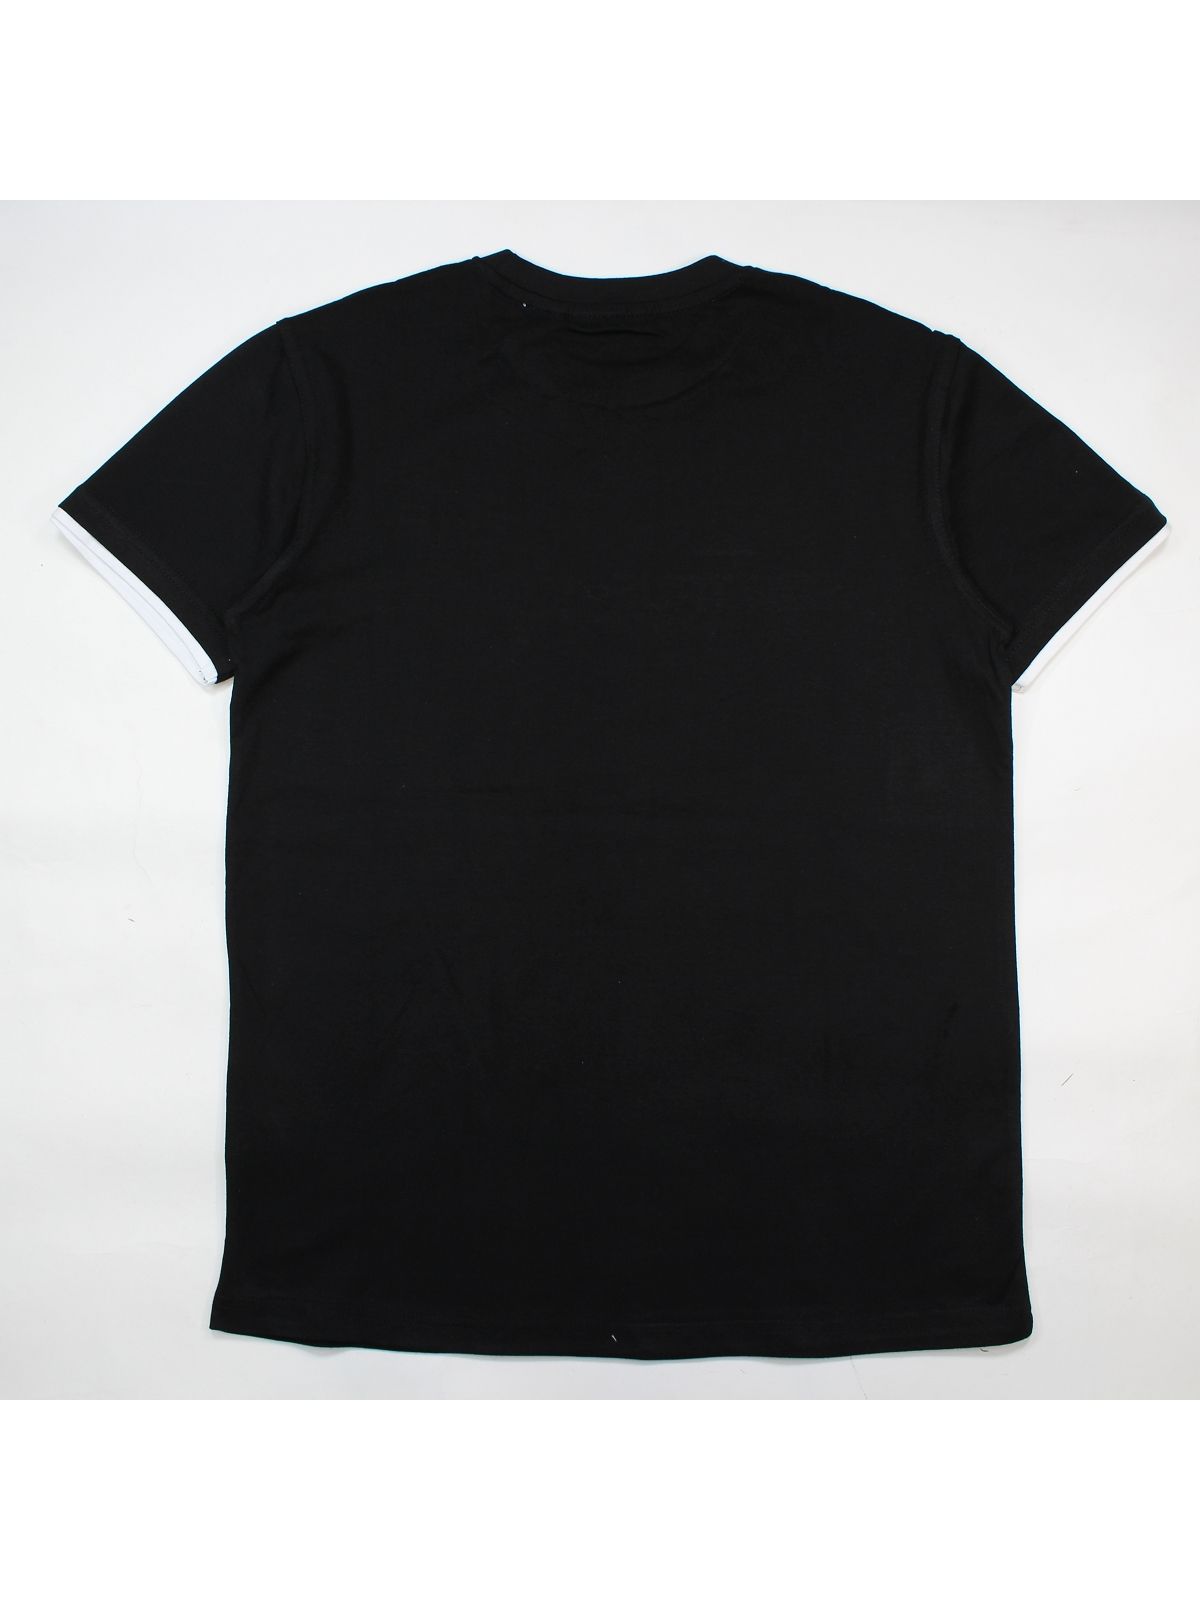 RG512 Camisetas con manga corta